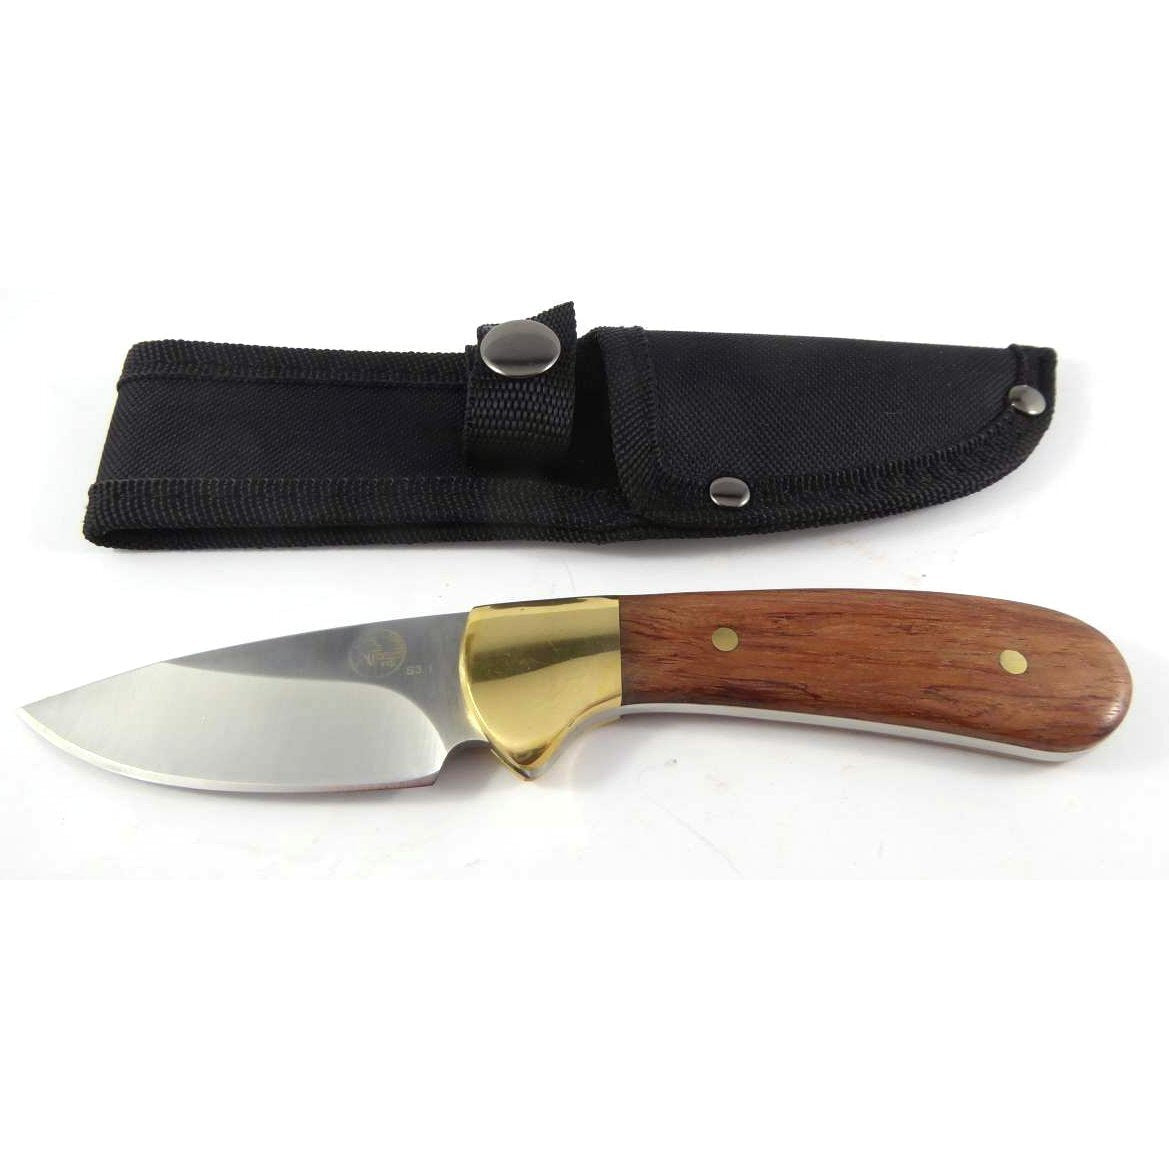 Tassie Tiger Knives Tassie Tiger 3 Inch Fixed Blade Skinner Hunting Knife - Nylon Sheath #s3.1N Saddle Brown